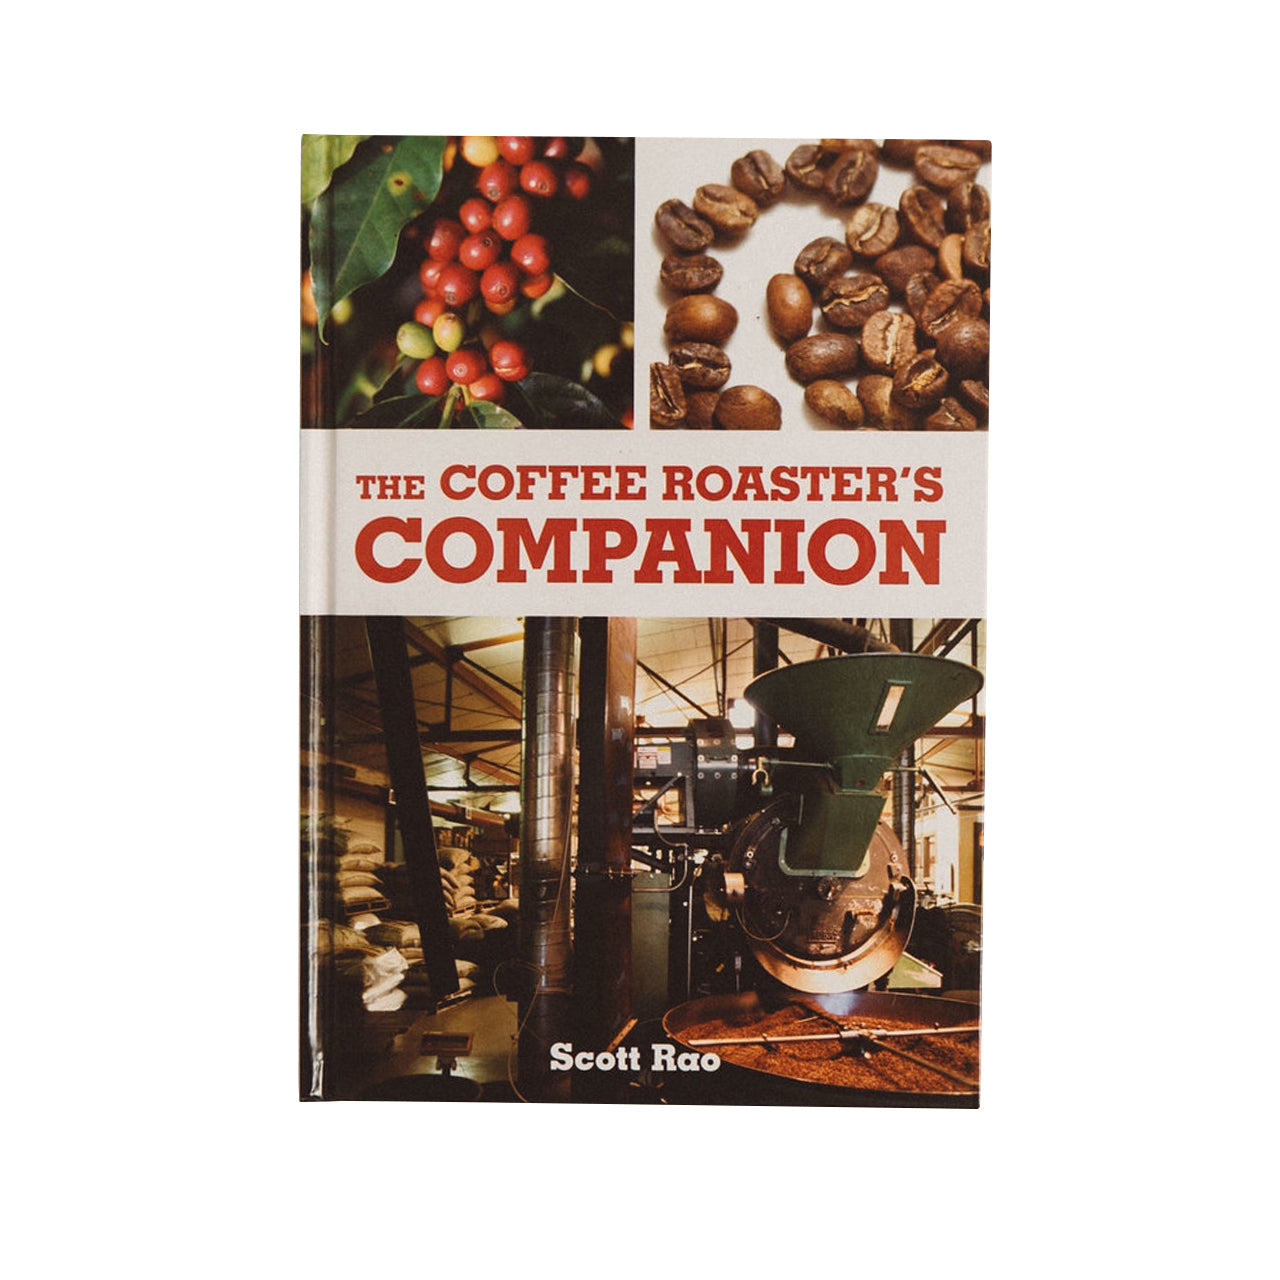 The Coffee Roaster's Companion by Scott Rao